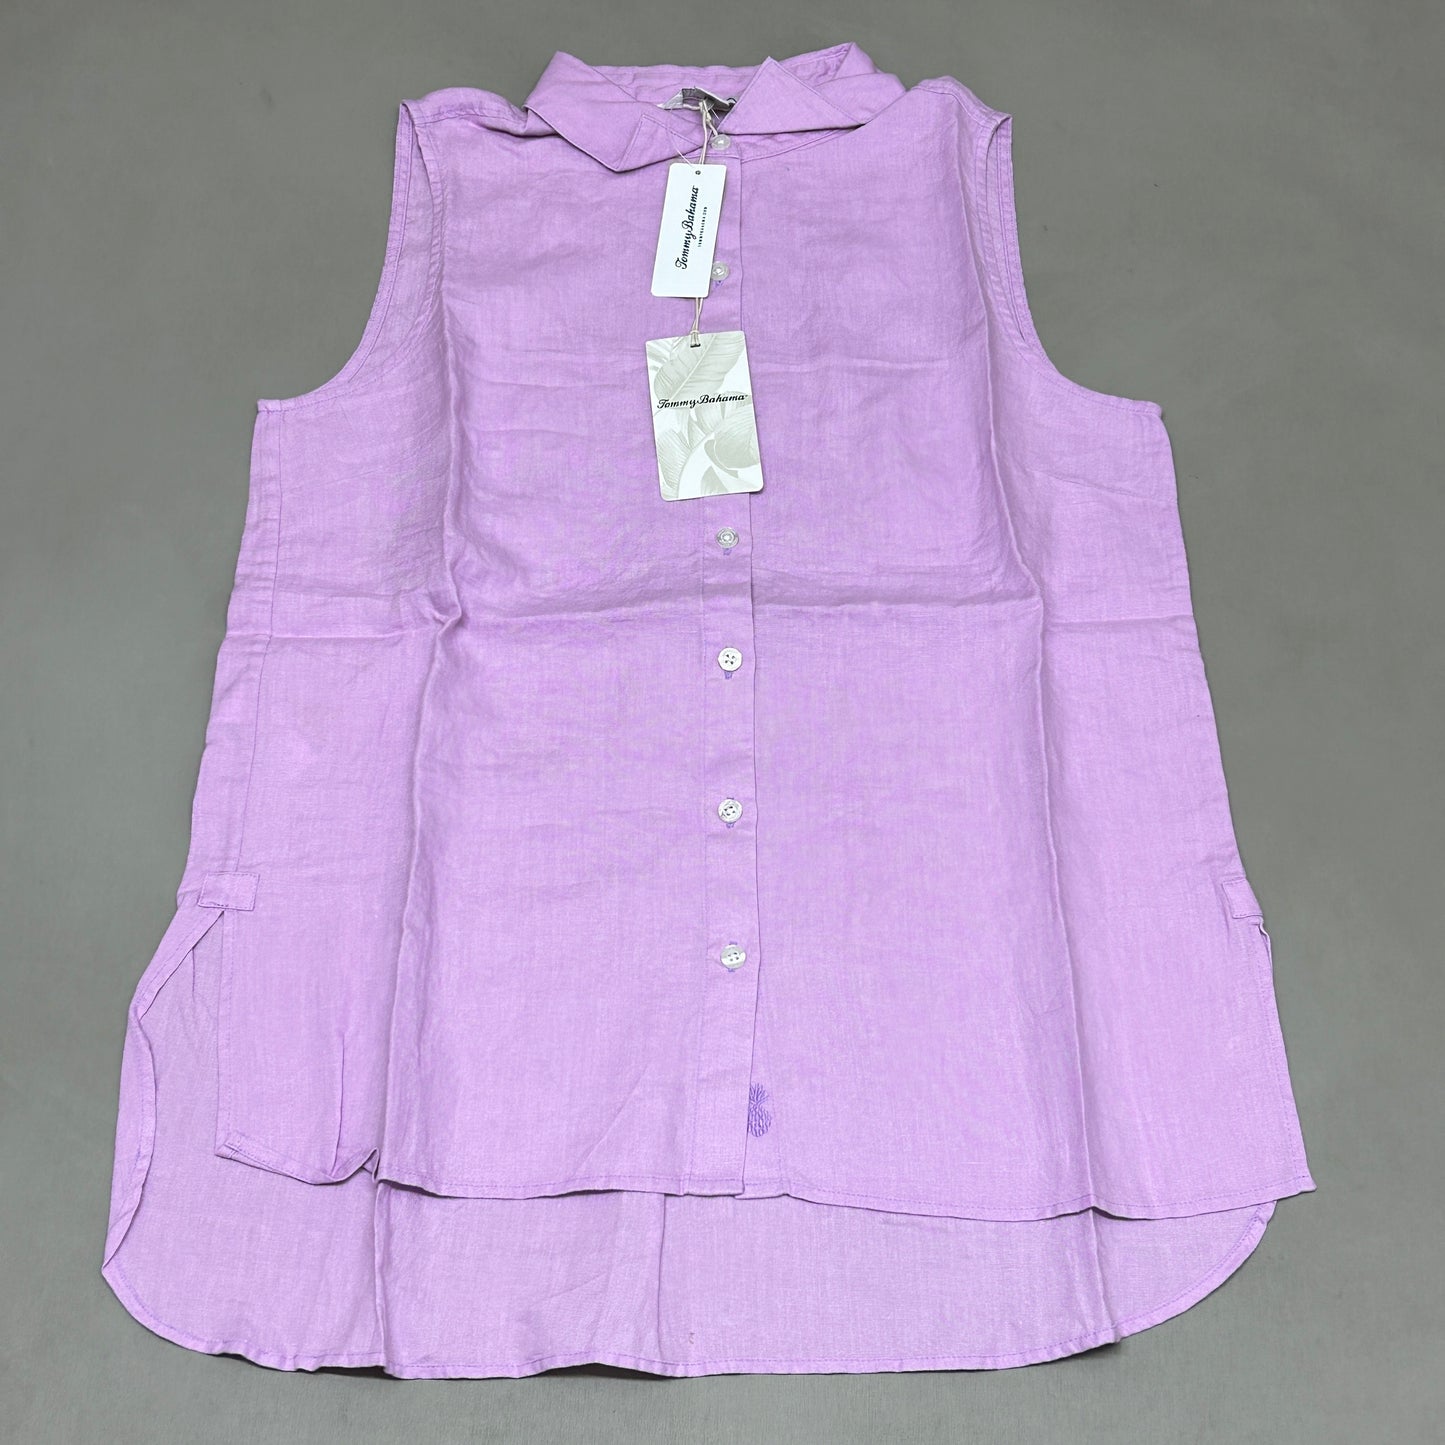 TOMMY BAHAMA Women's Coastalina Shirt Sleeveless Charming Rose Size S(New)